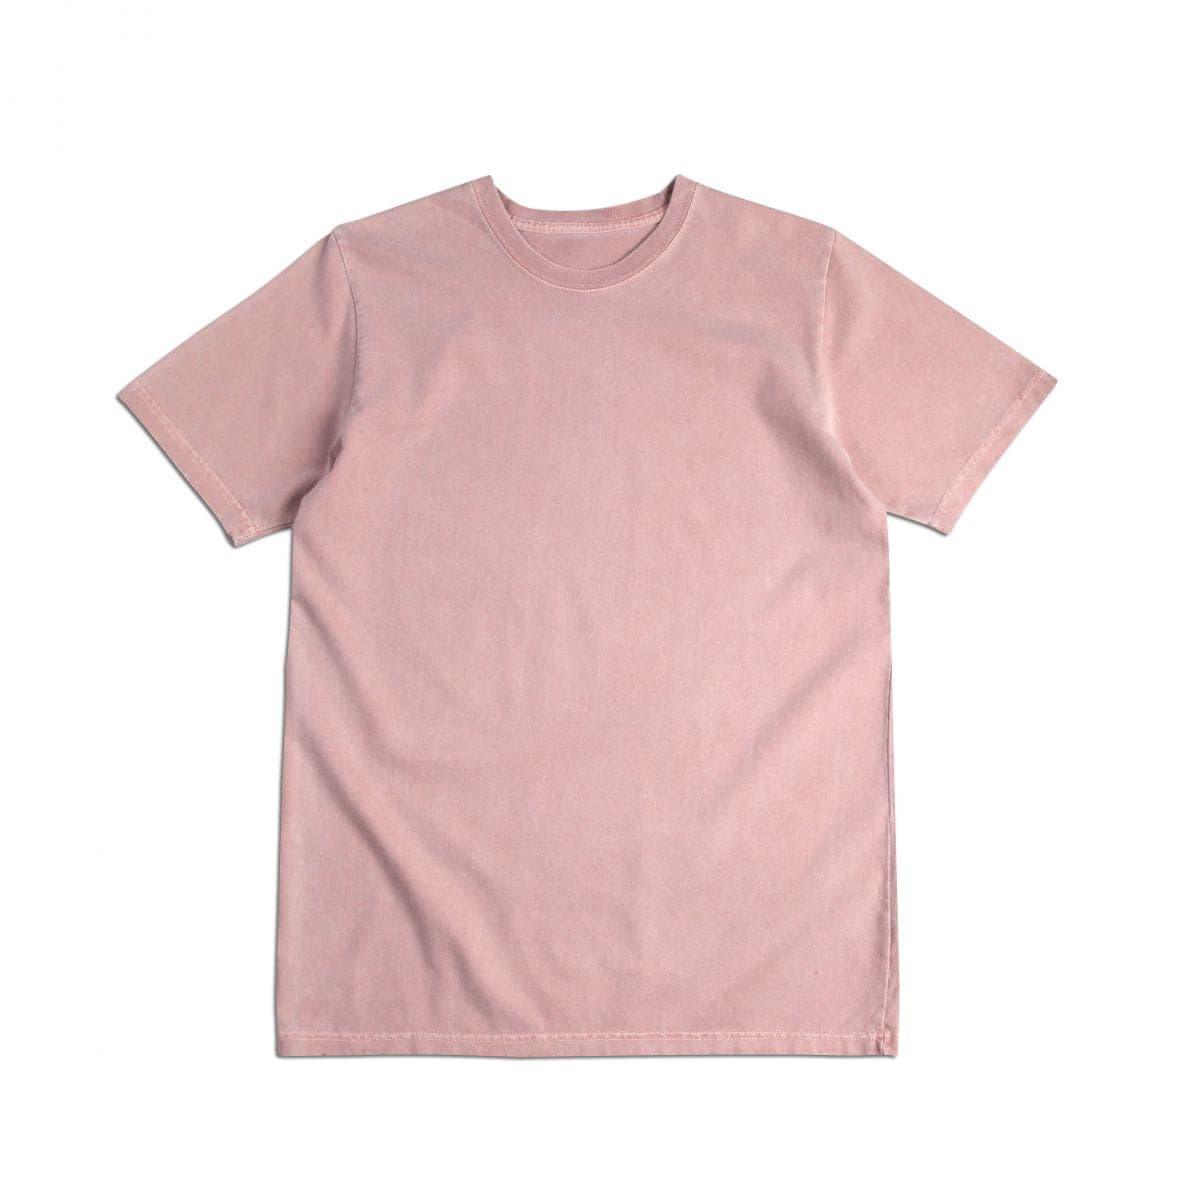 Max Heavyweight T-Shirt Garment Dye (7.5 oz)